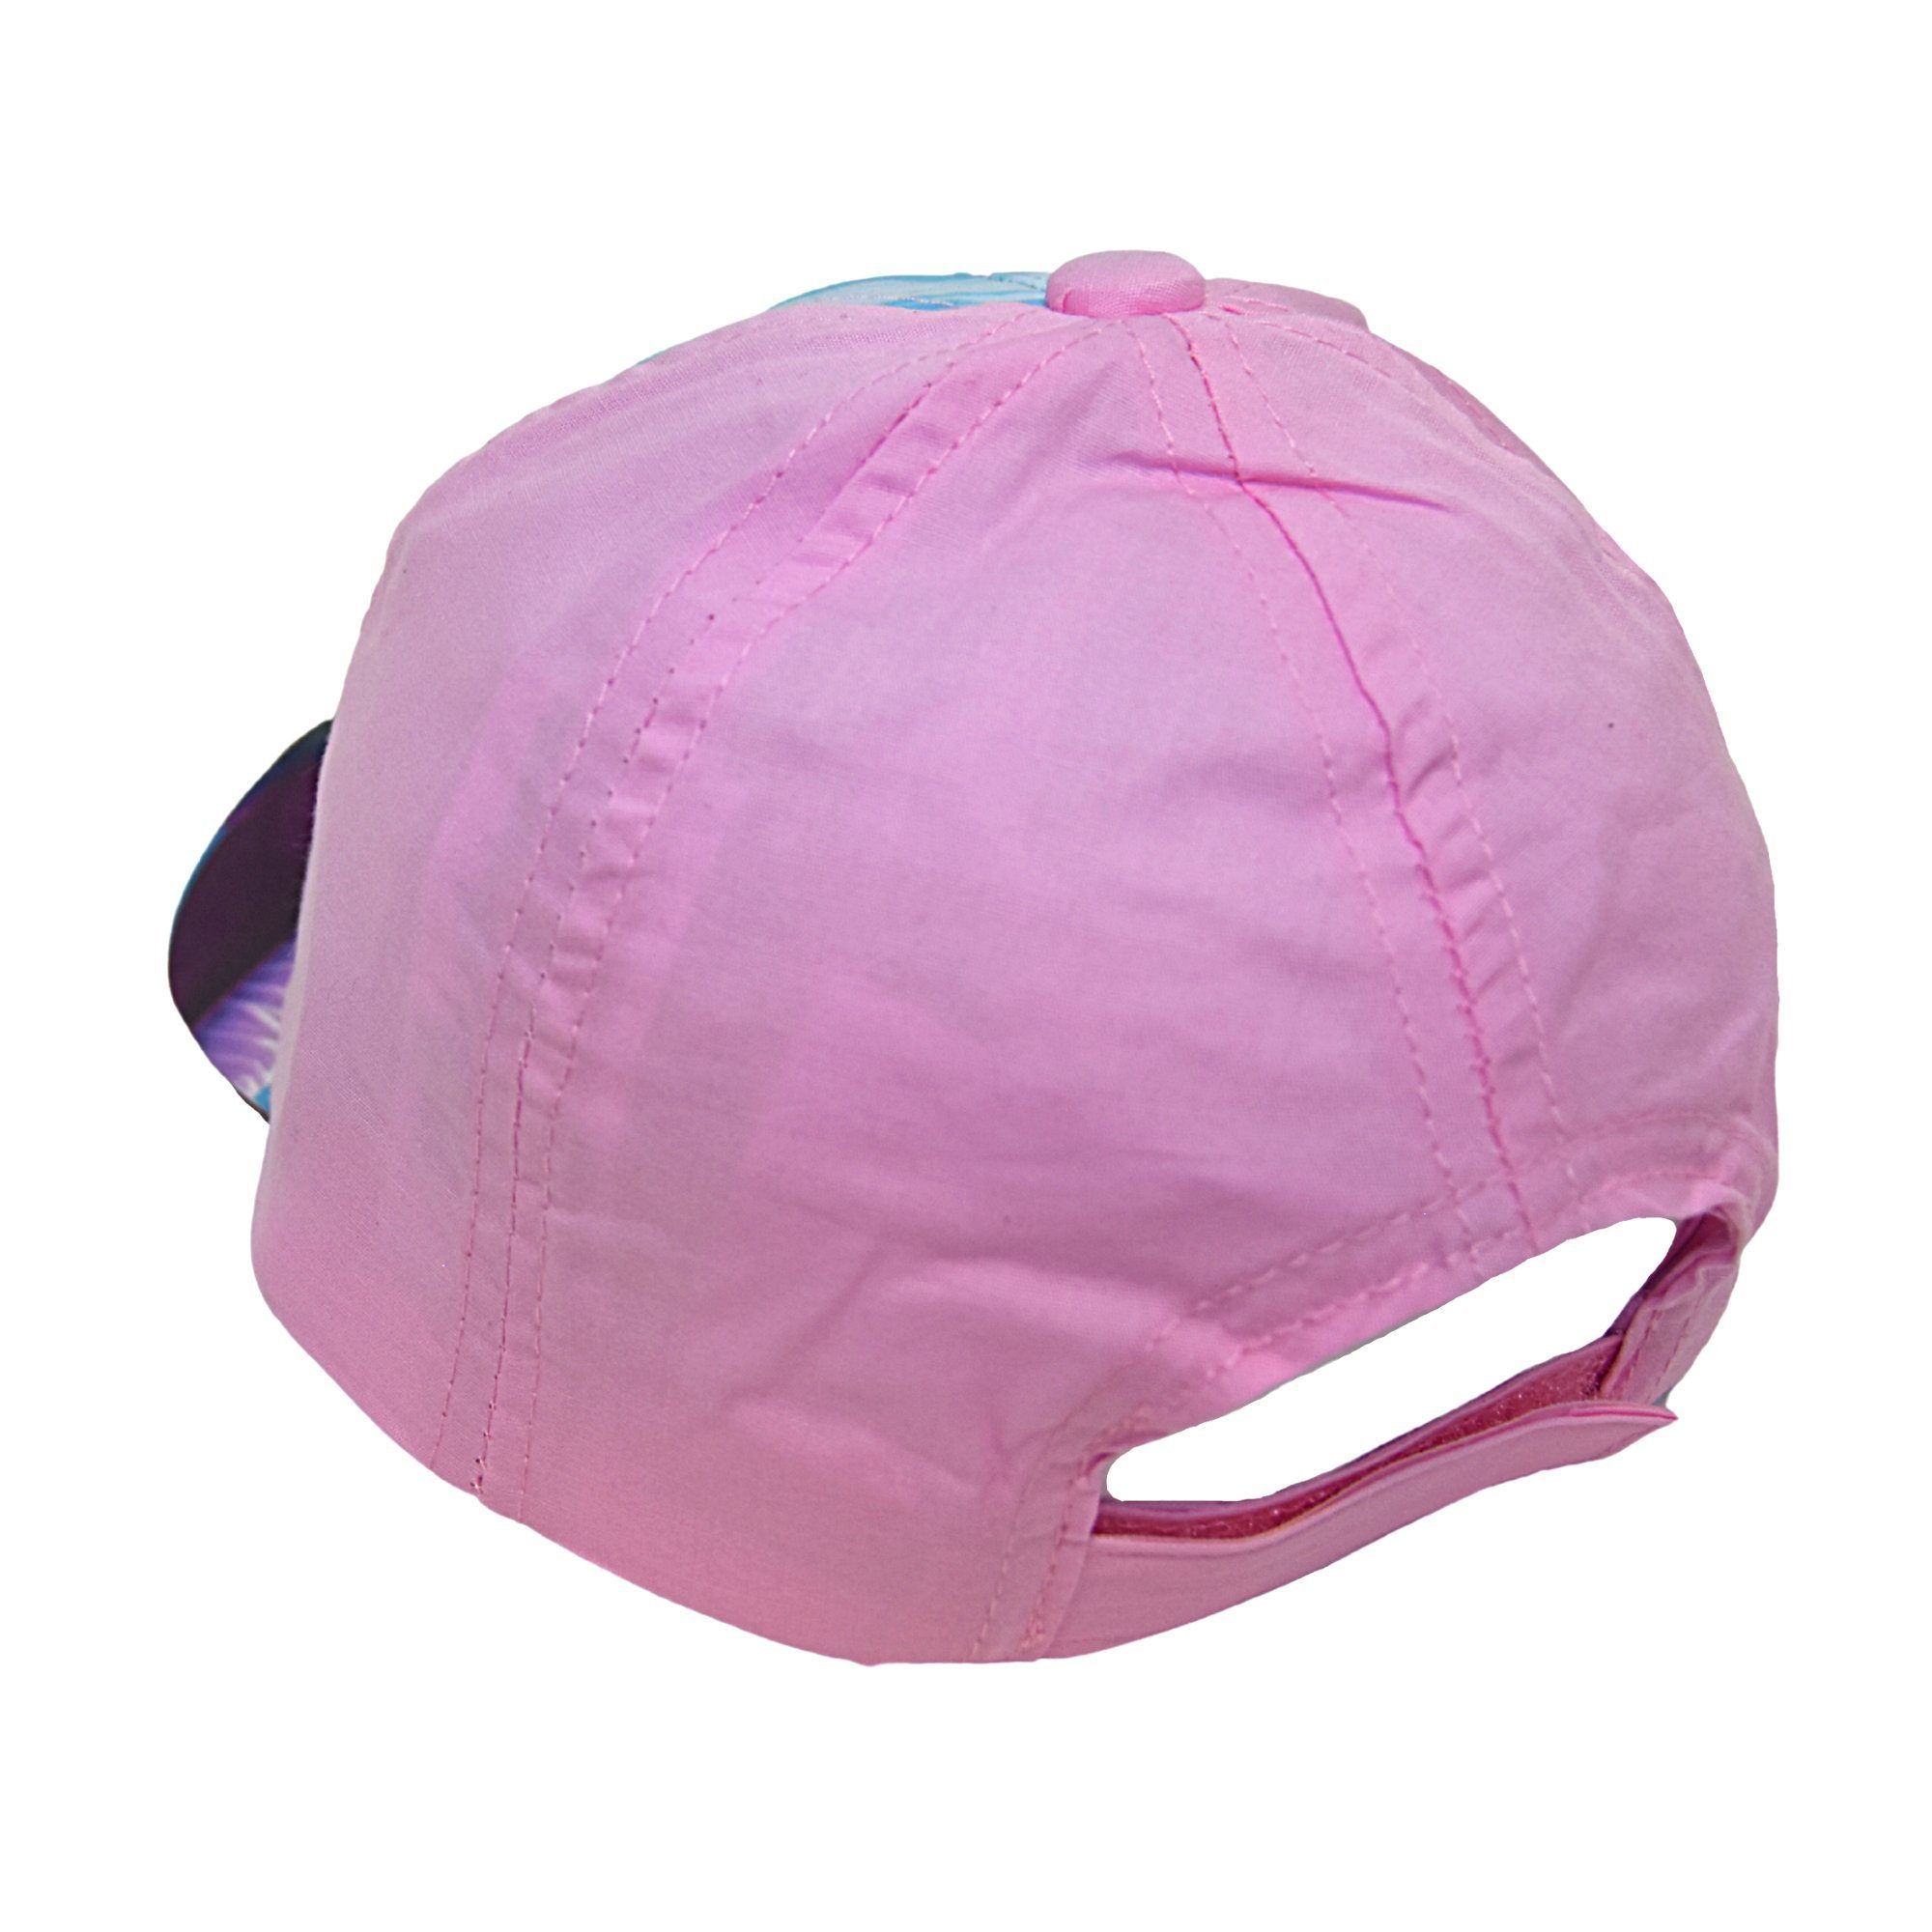 cm & 30+ Sommerkappe Disney Baseball Schutz Rosa Nemo Cap UV 52-54 Größe mit Dory